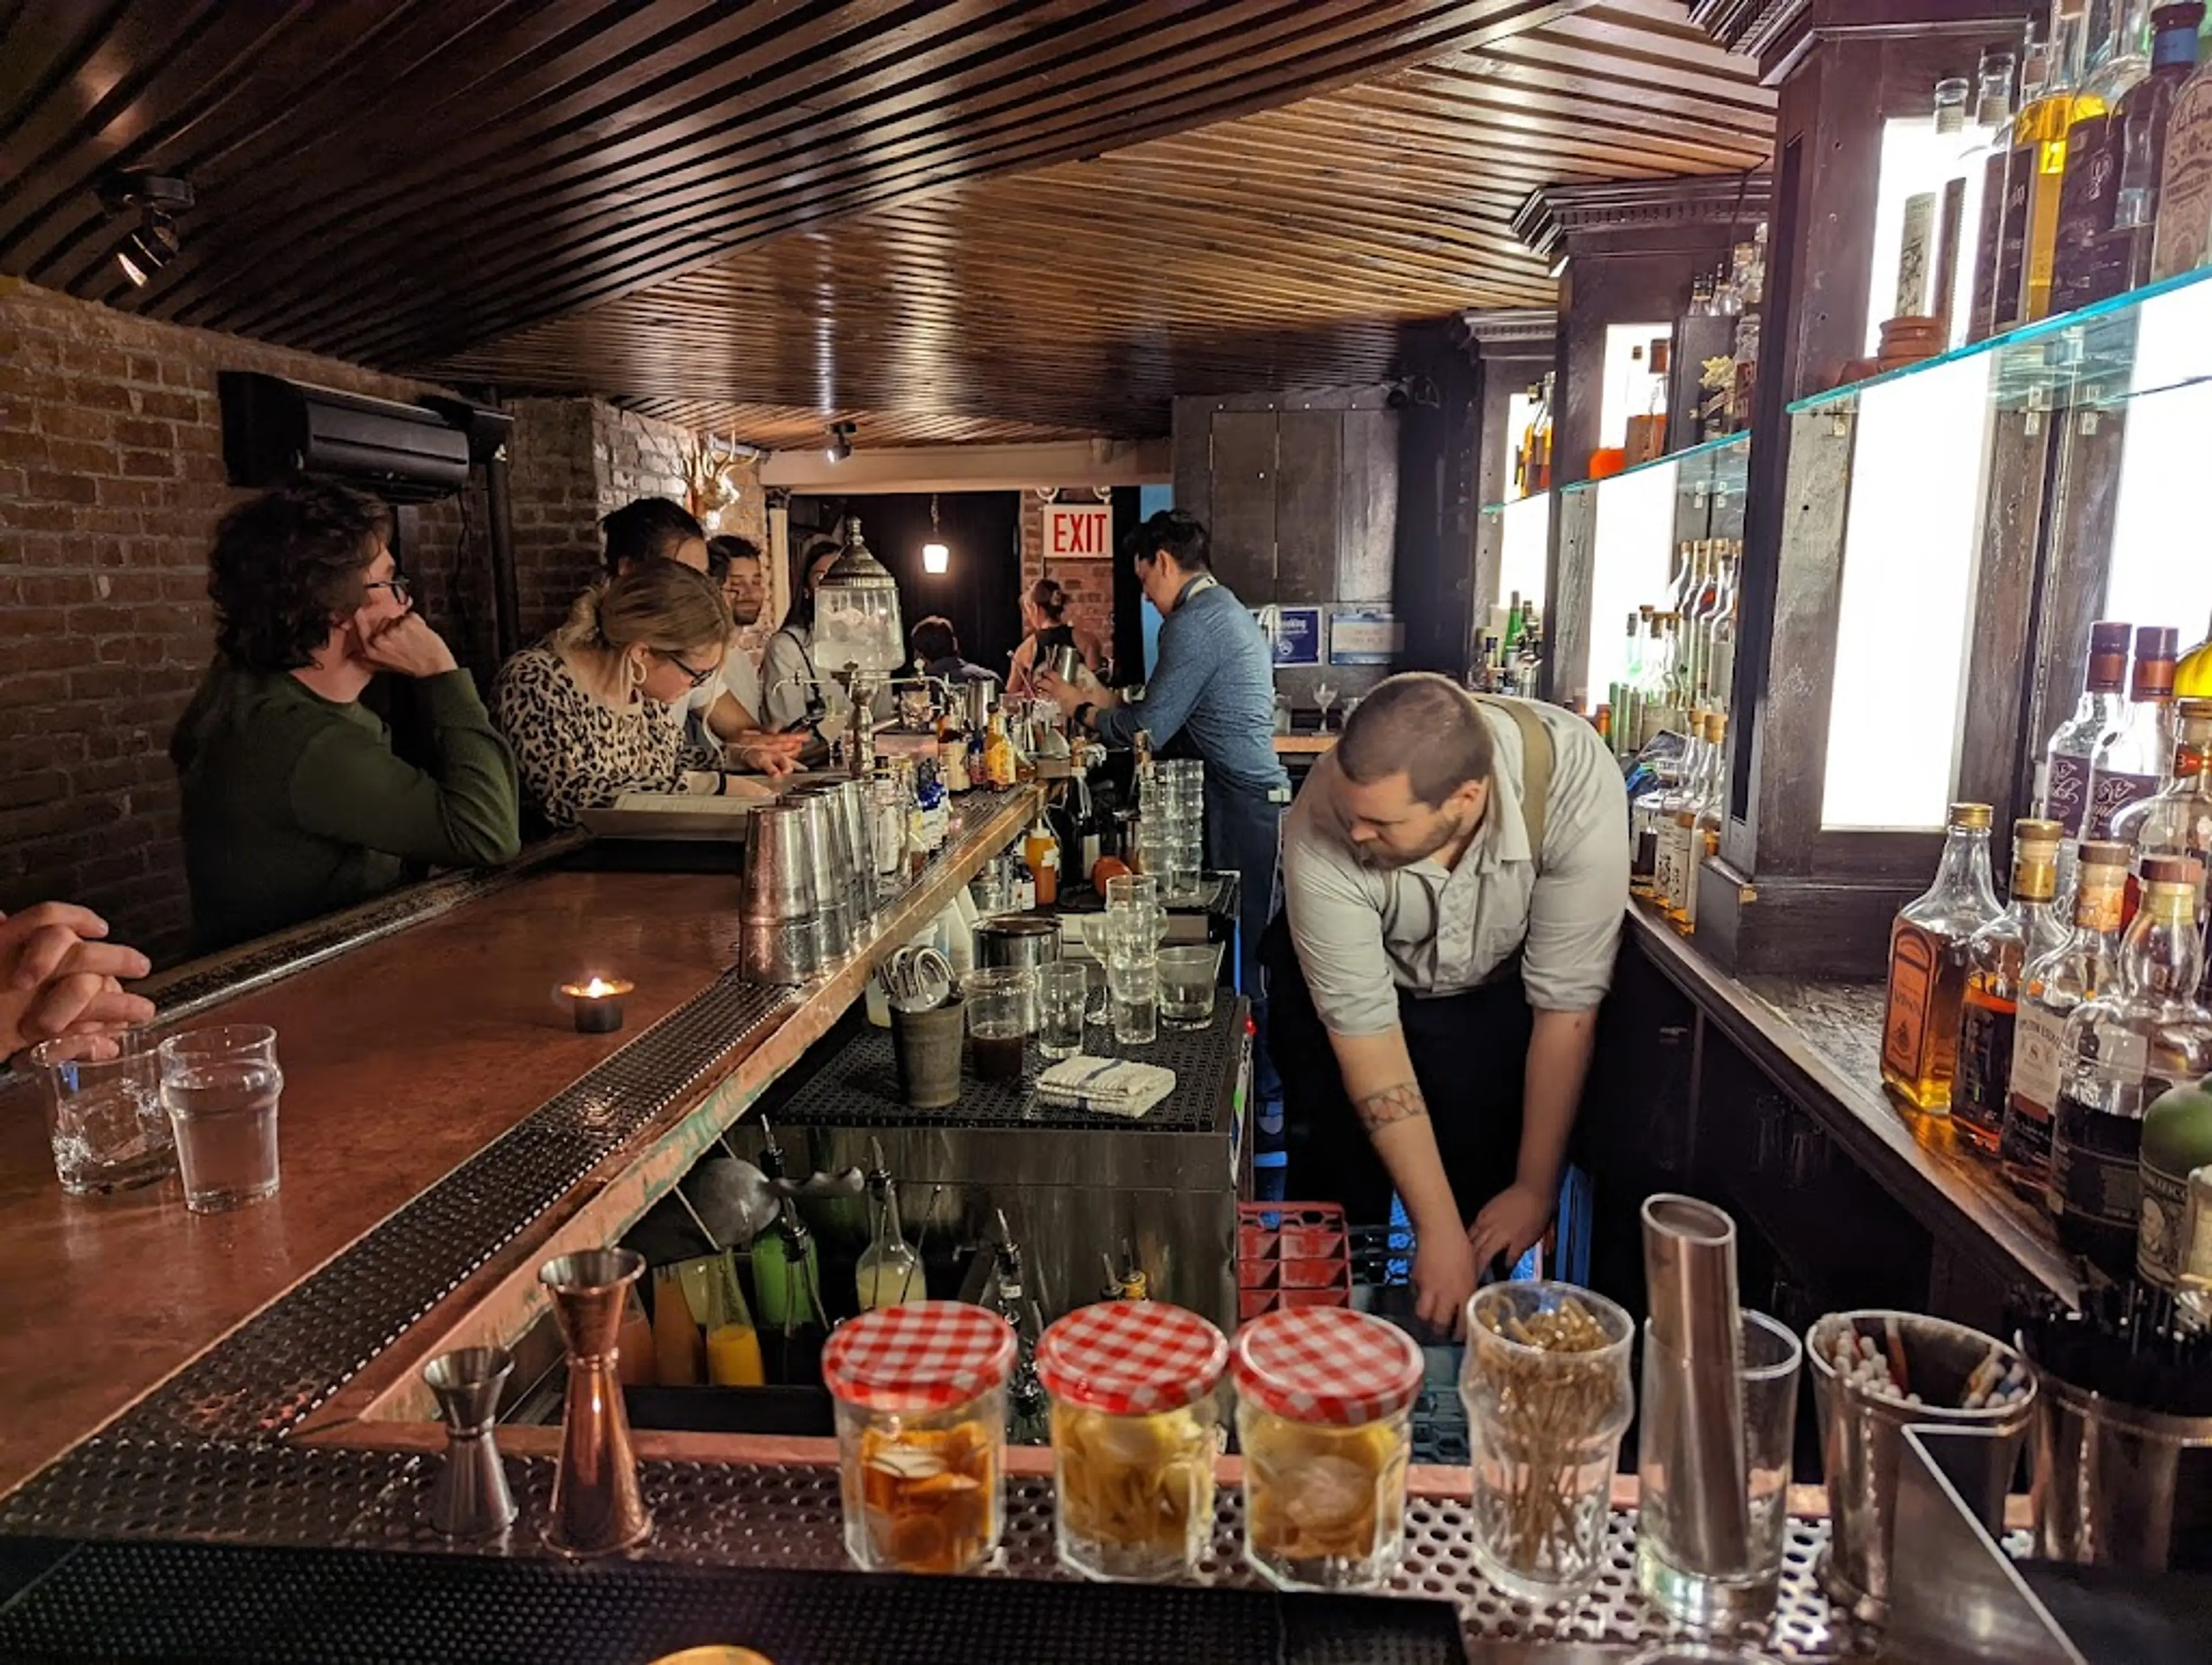 Speakeasy-style Bar in East Village